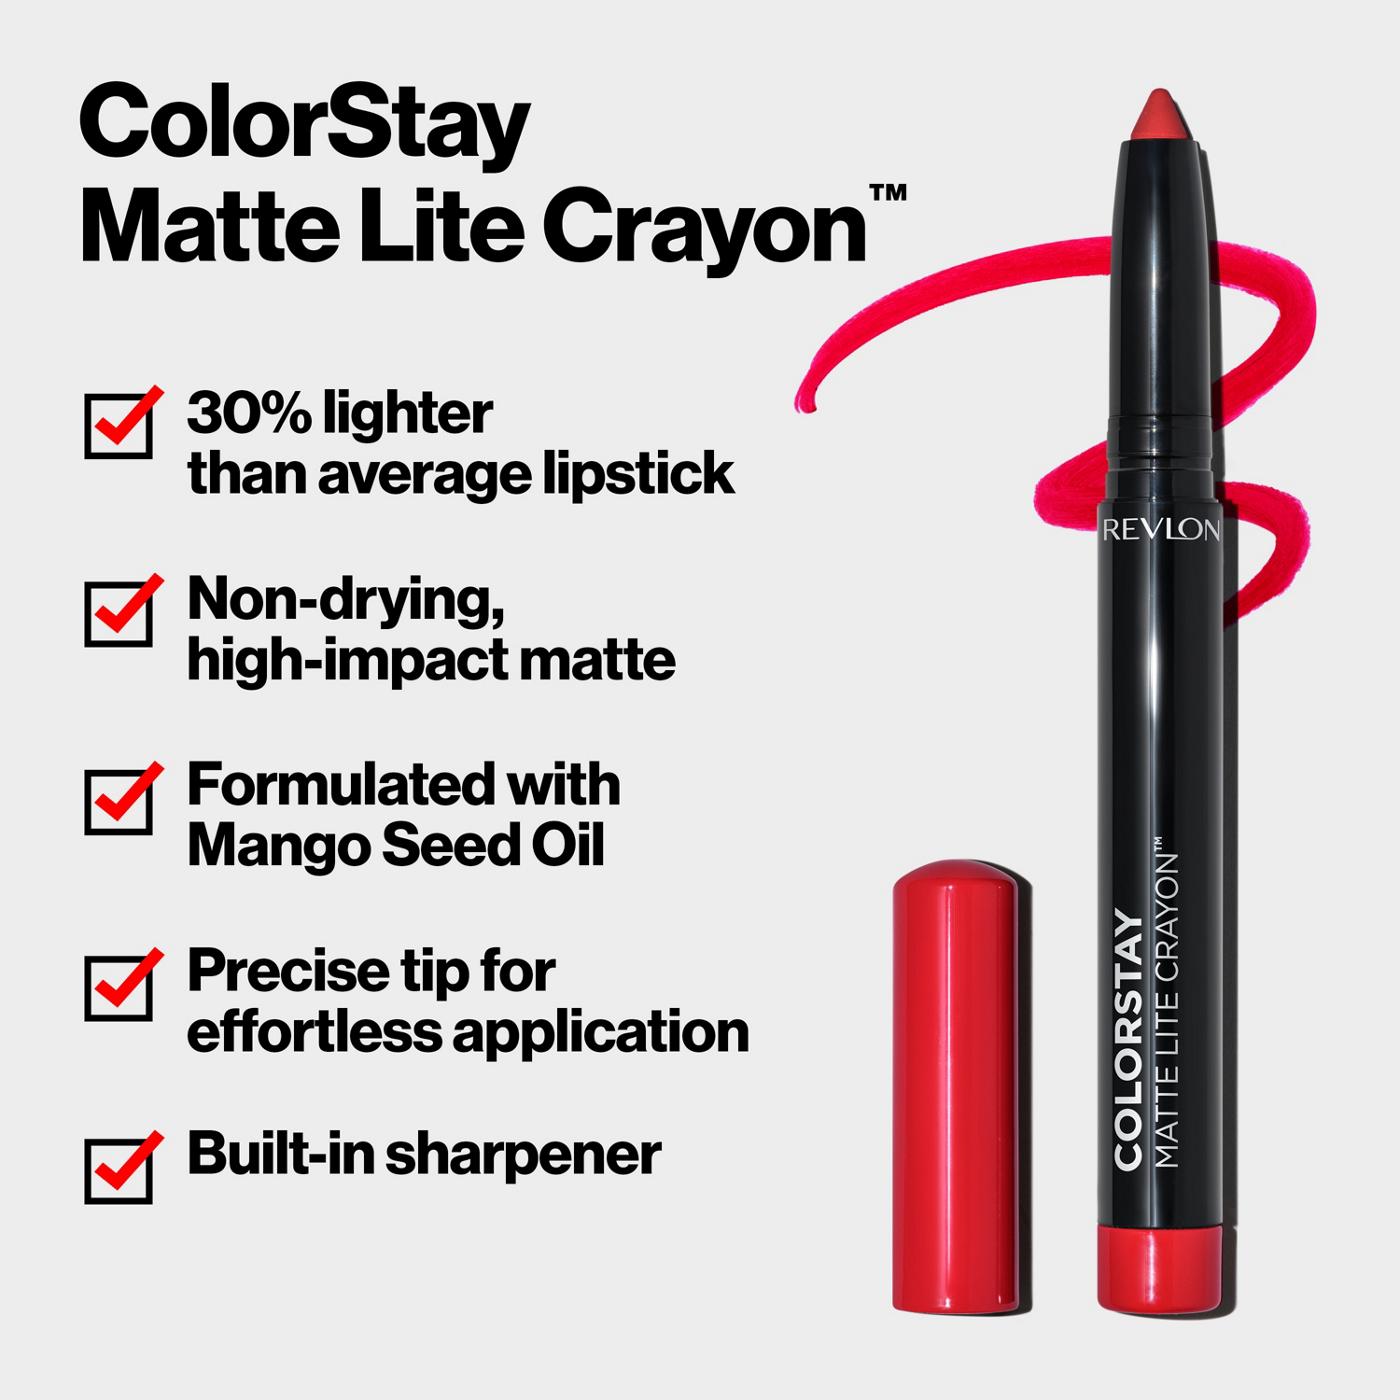 Revlon ColorStay Matte Lite Crayon Lipstick - Lifted; image 2 of 7